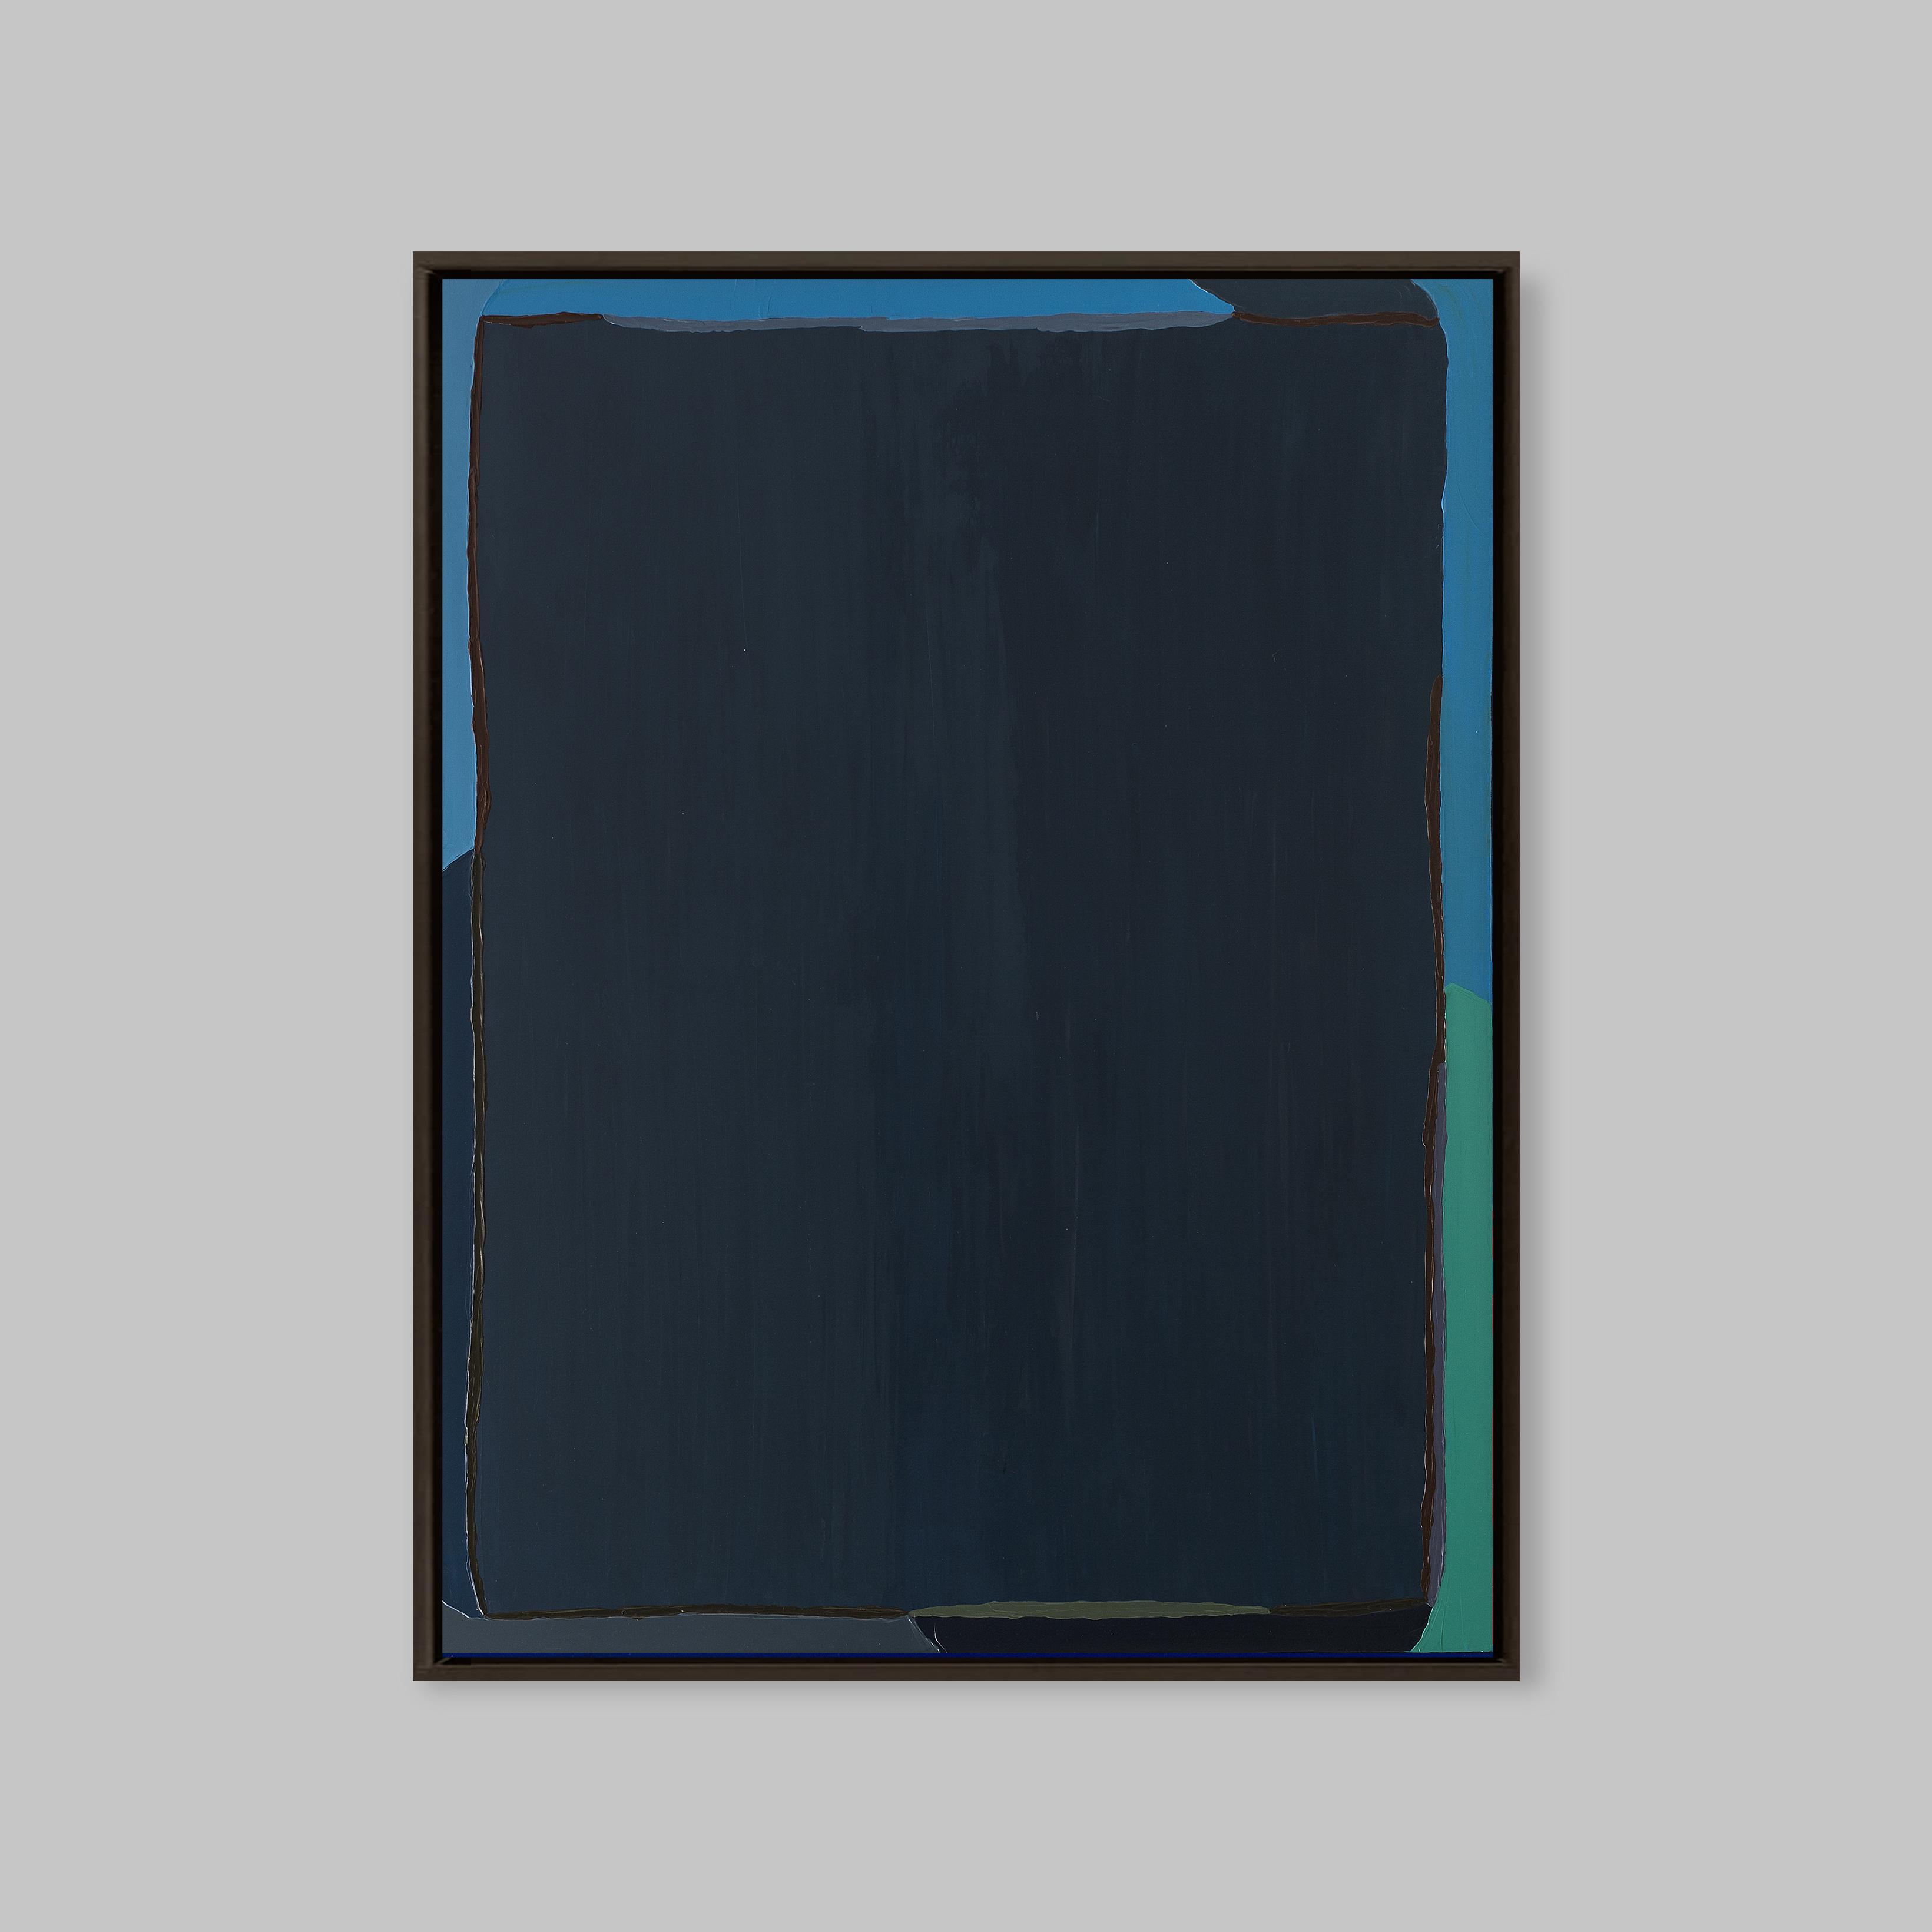 Glitch Exodus 17, 2015
170 x 130 cm
Peinture Toile